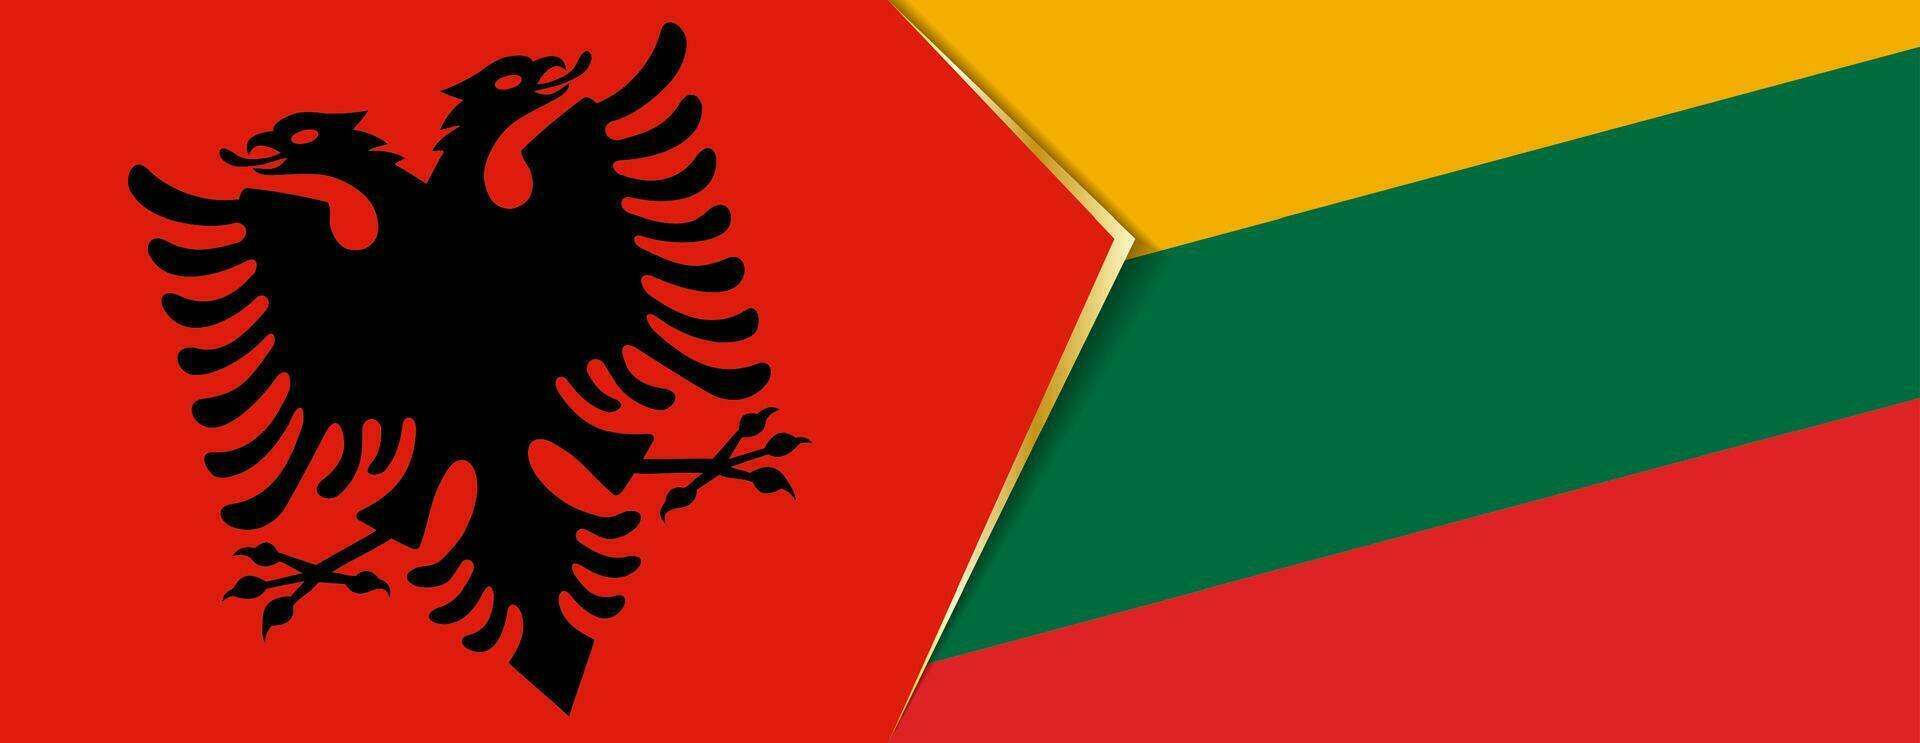 Albanië en Litouwen vlaggen, twee vector vlaggen.